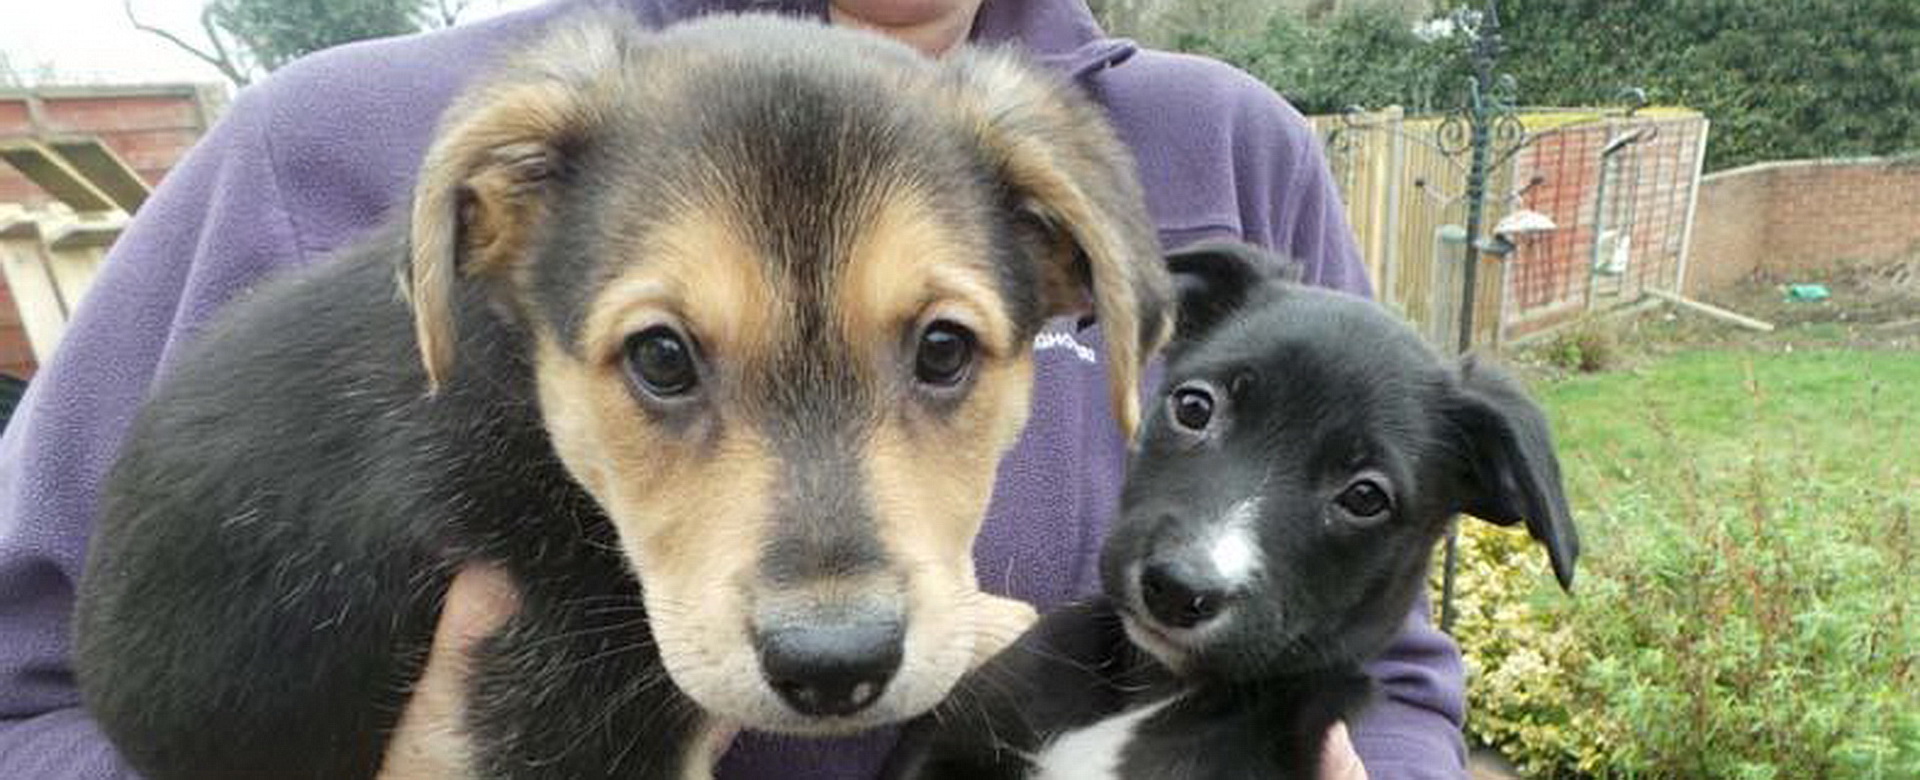 Foster puppies